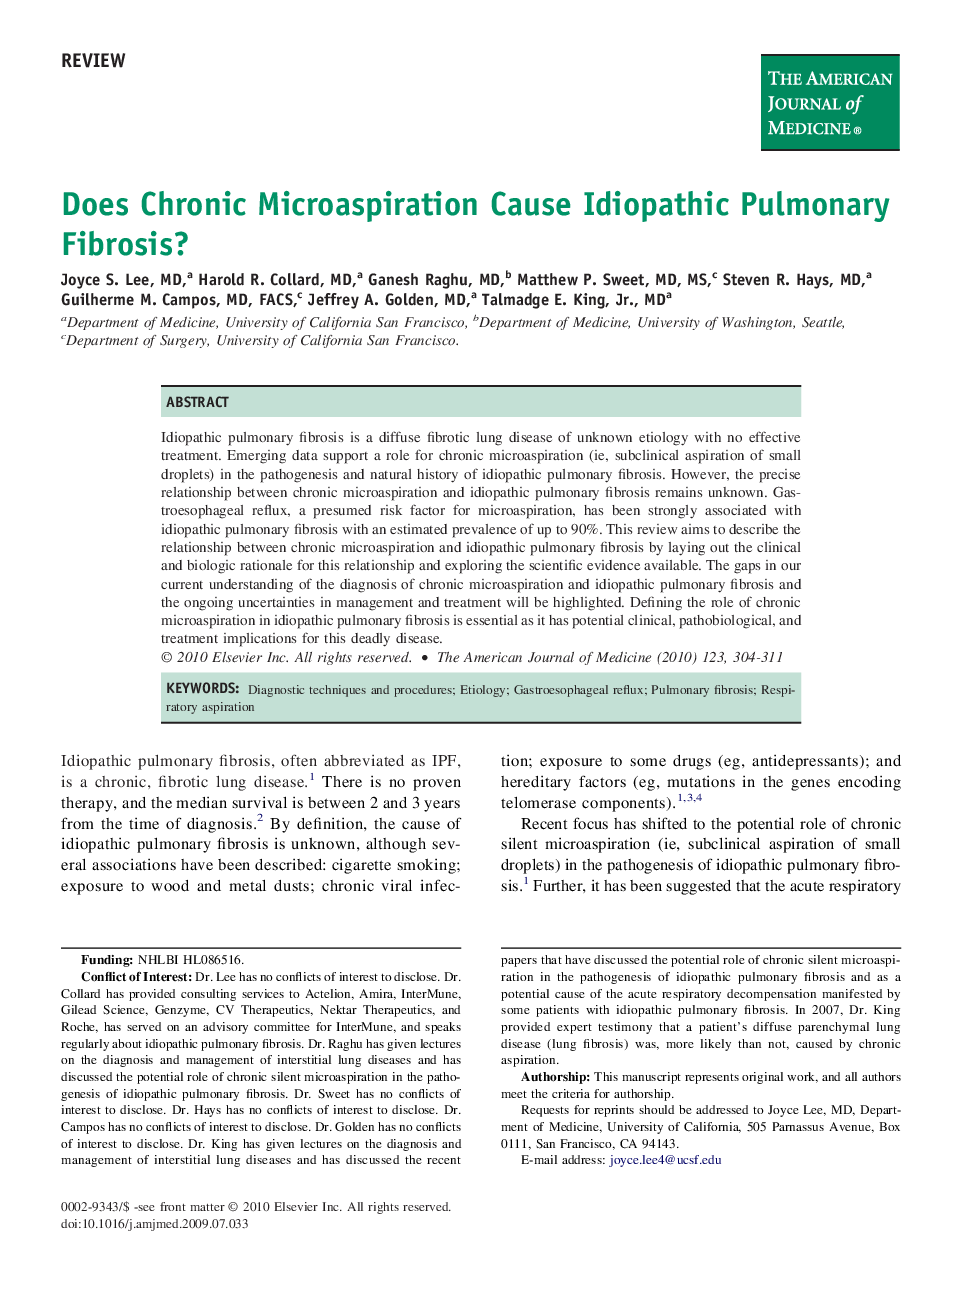 Does Chronic Microaspiration Cause Idiopathic Pulmonary Fibrosis? 